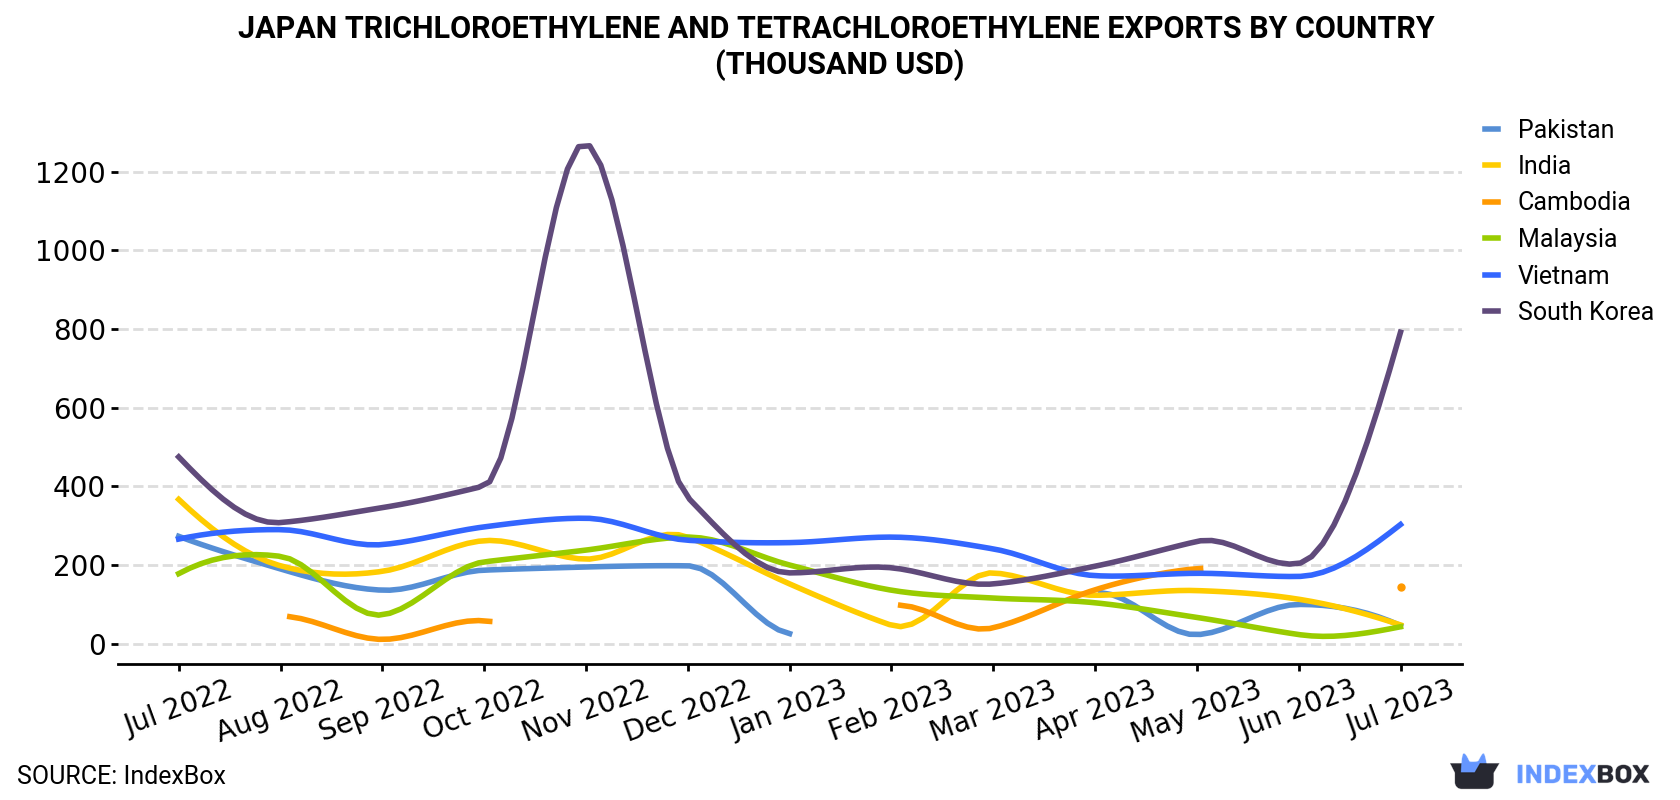 Japan Trichloroethylene And Tetrachloroethylene Exports By Country (Thousand USD)